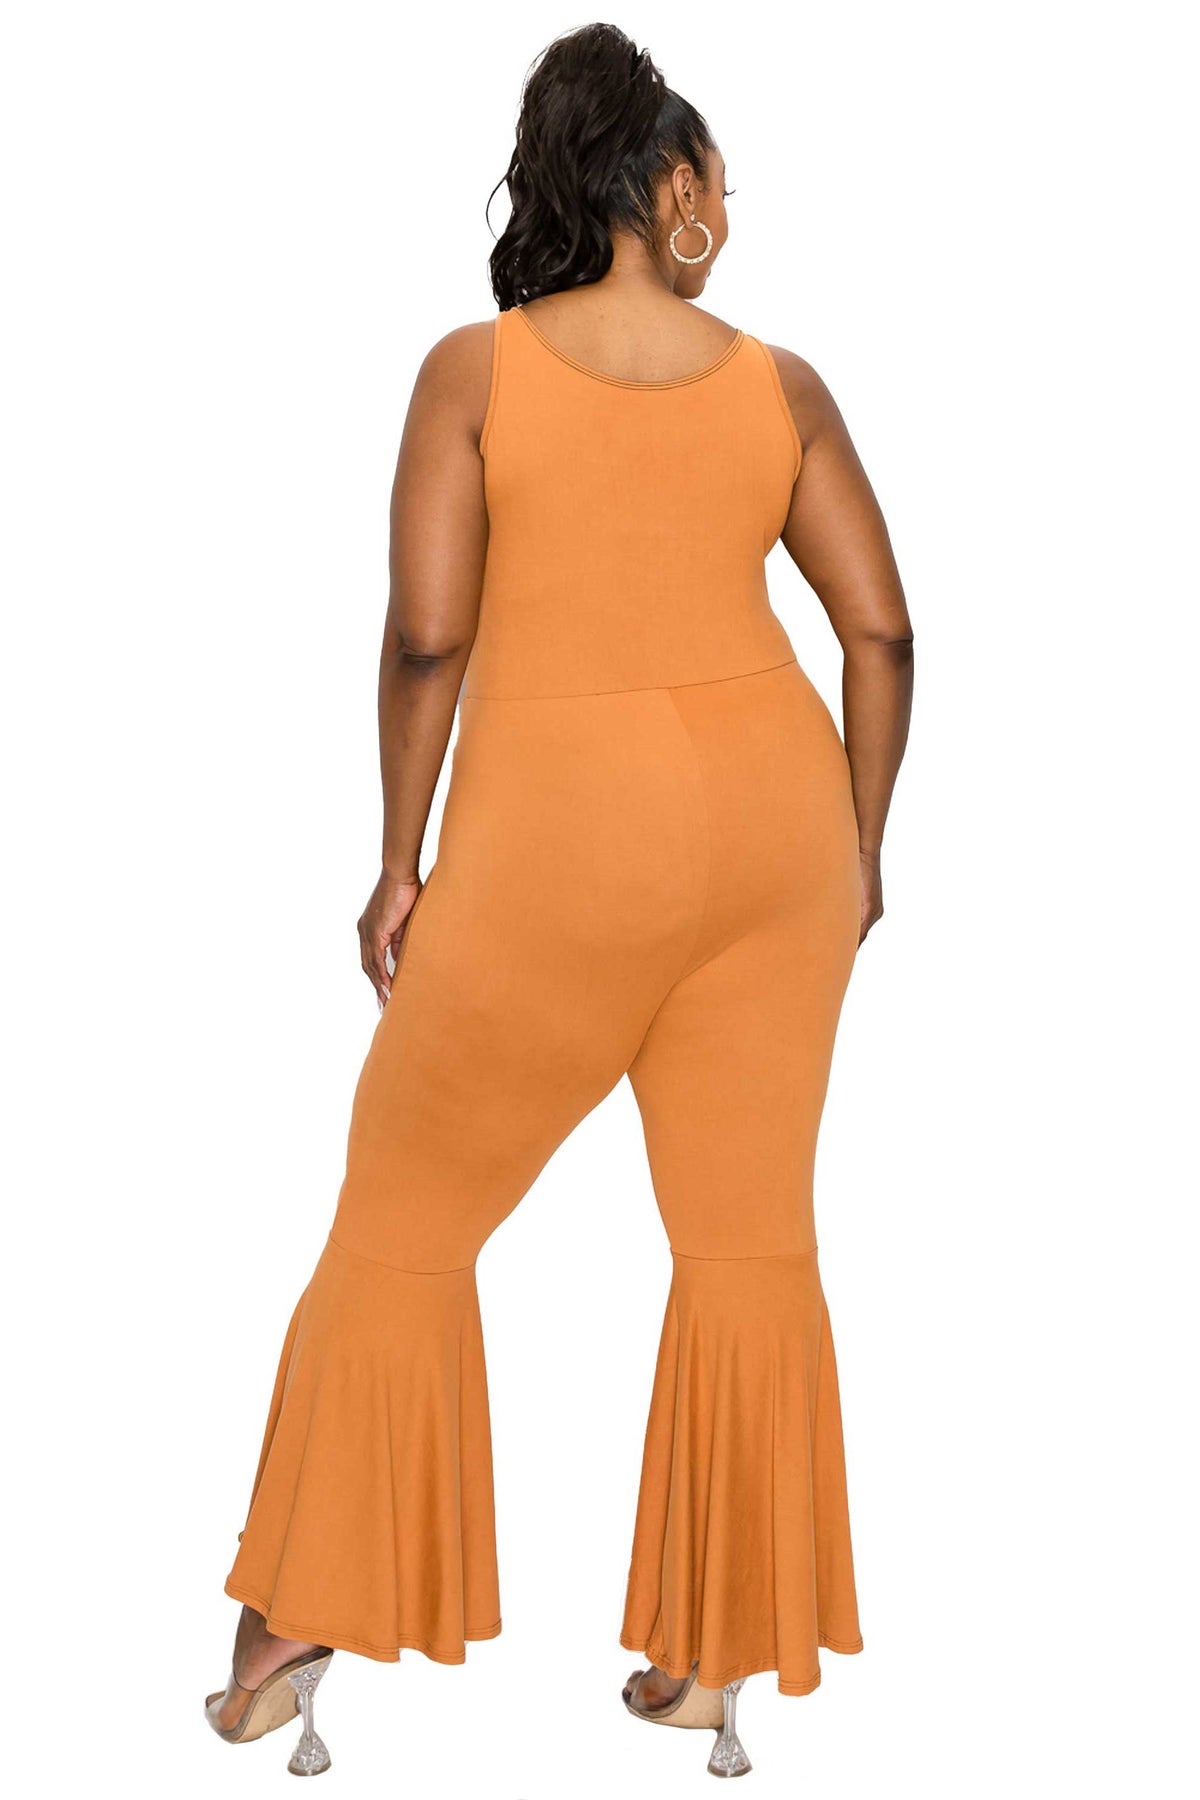 livd plus size boutique bodycon flare jumpsuit in clay orange